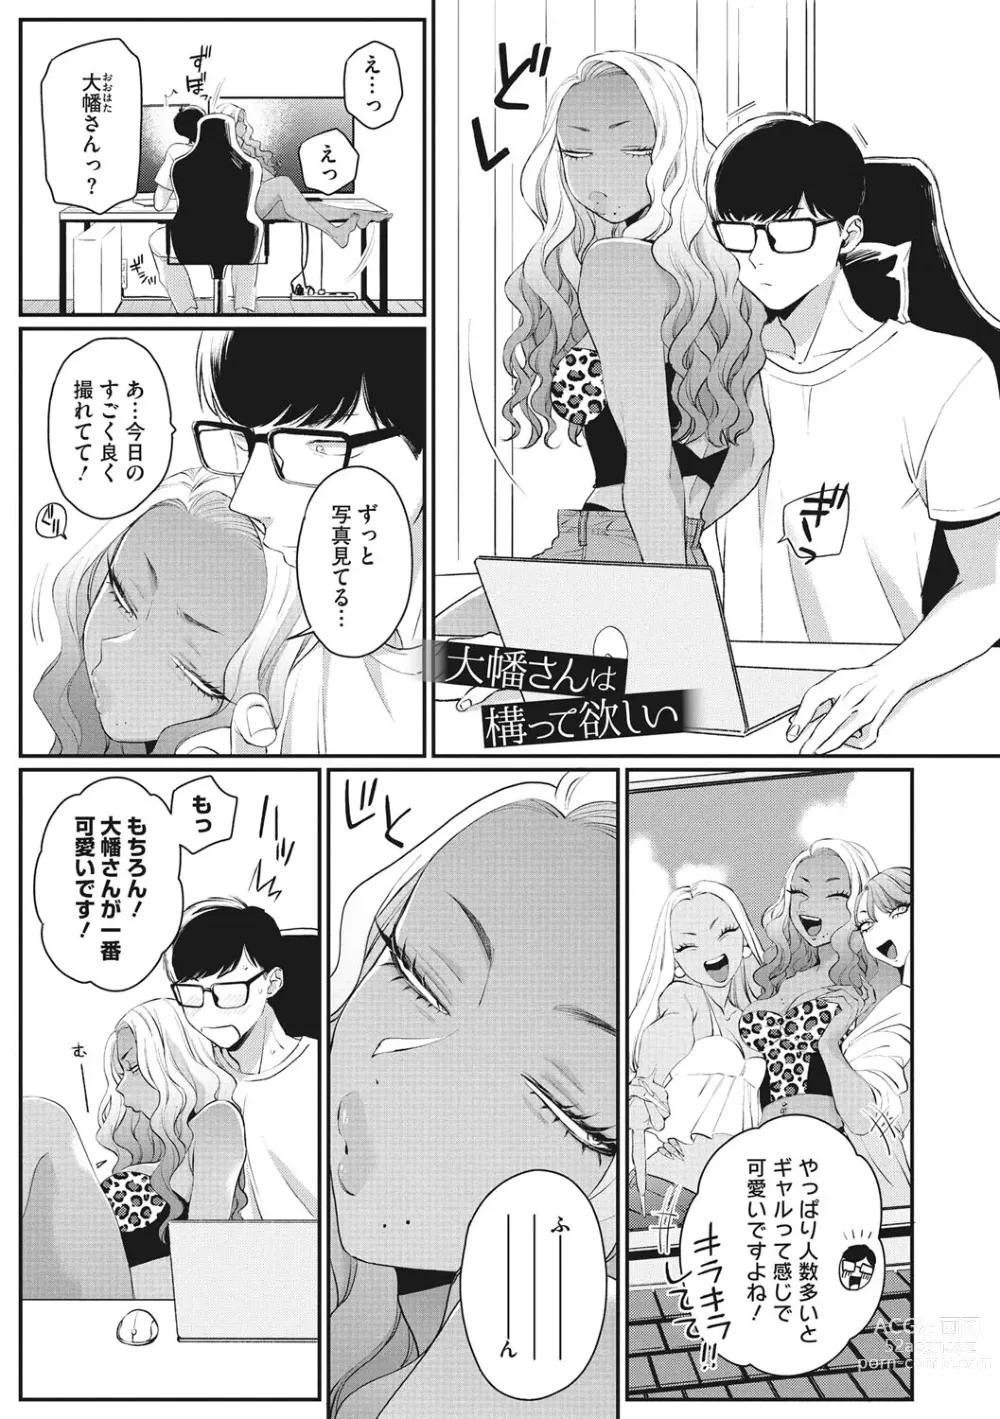 Page 206 of manga Kuro Gal  a La Carte